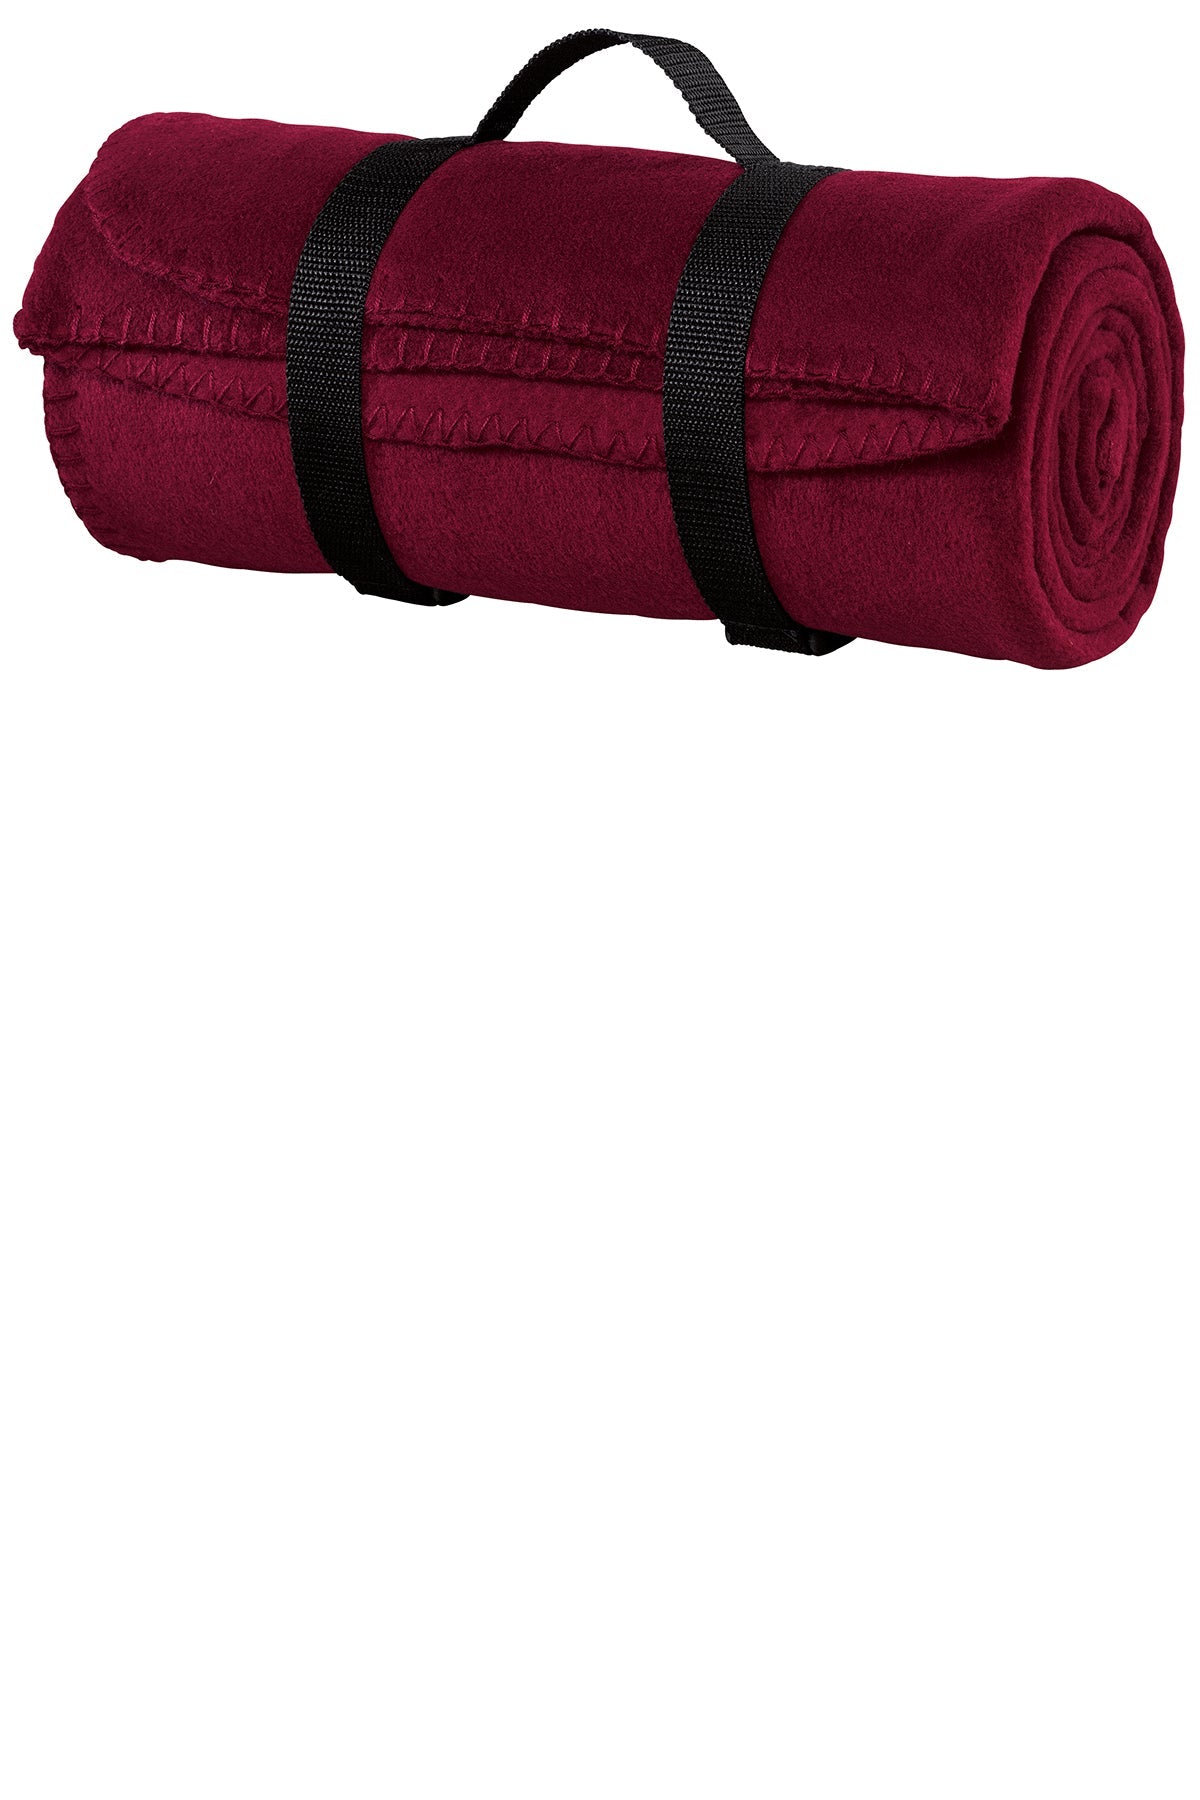 Port Authority - Value Fleece Custom Blankets with Strap, Maroon